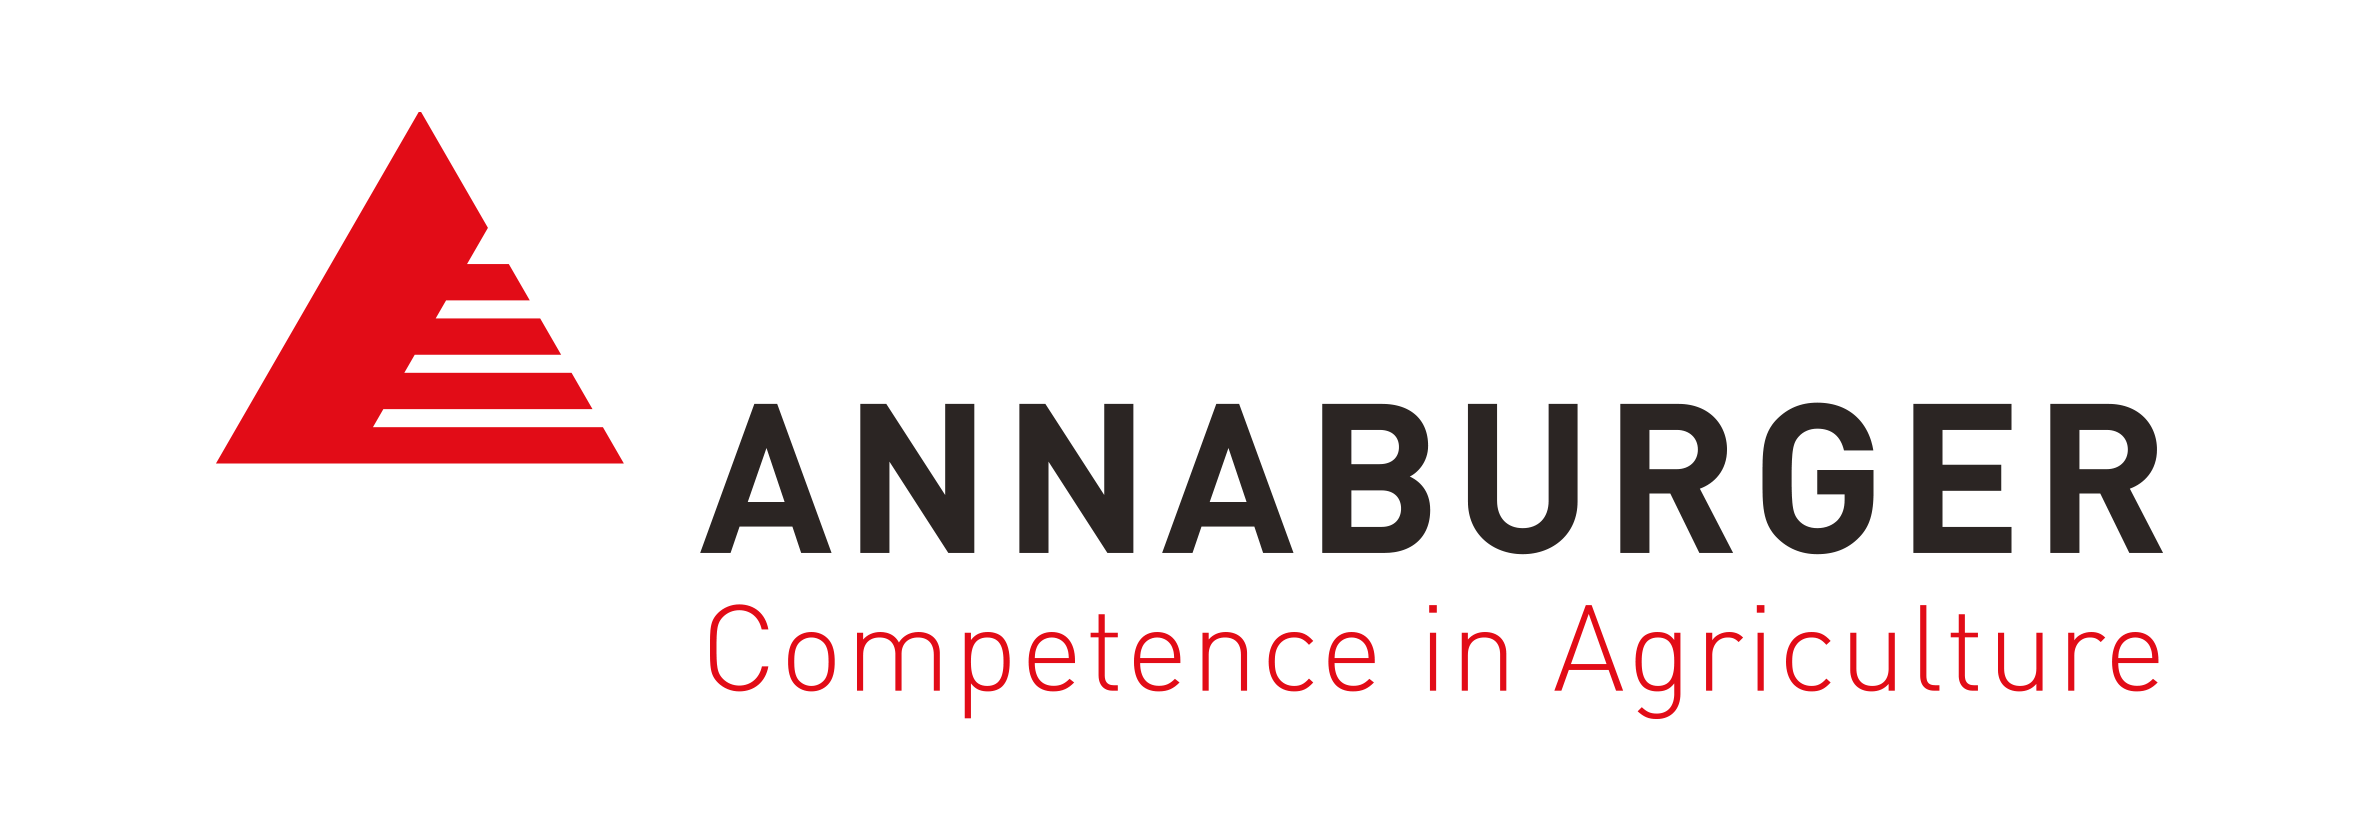 annaburger-logo